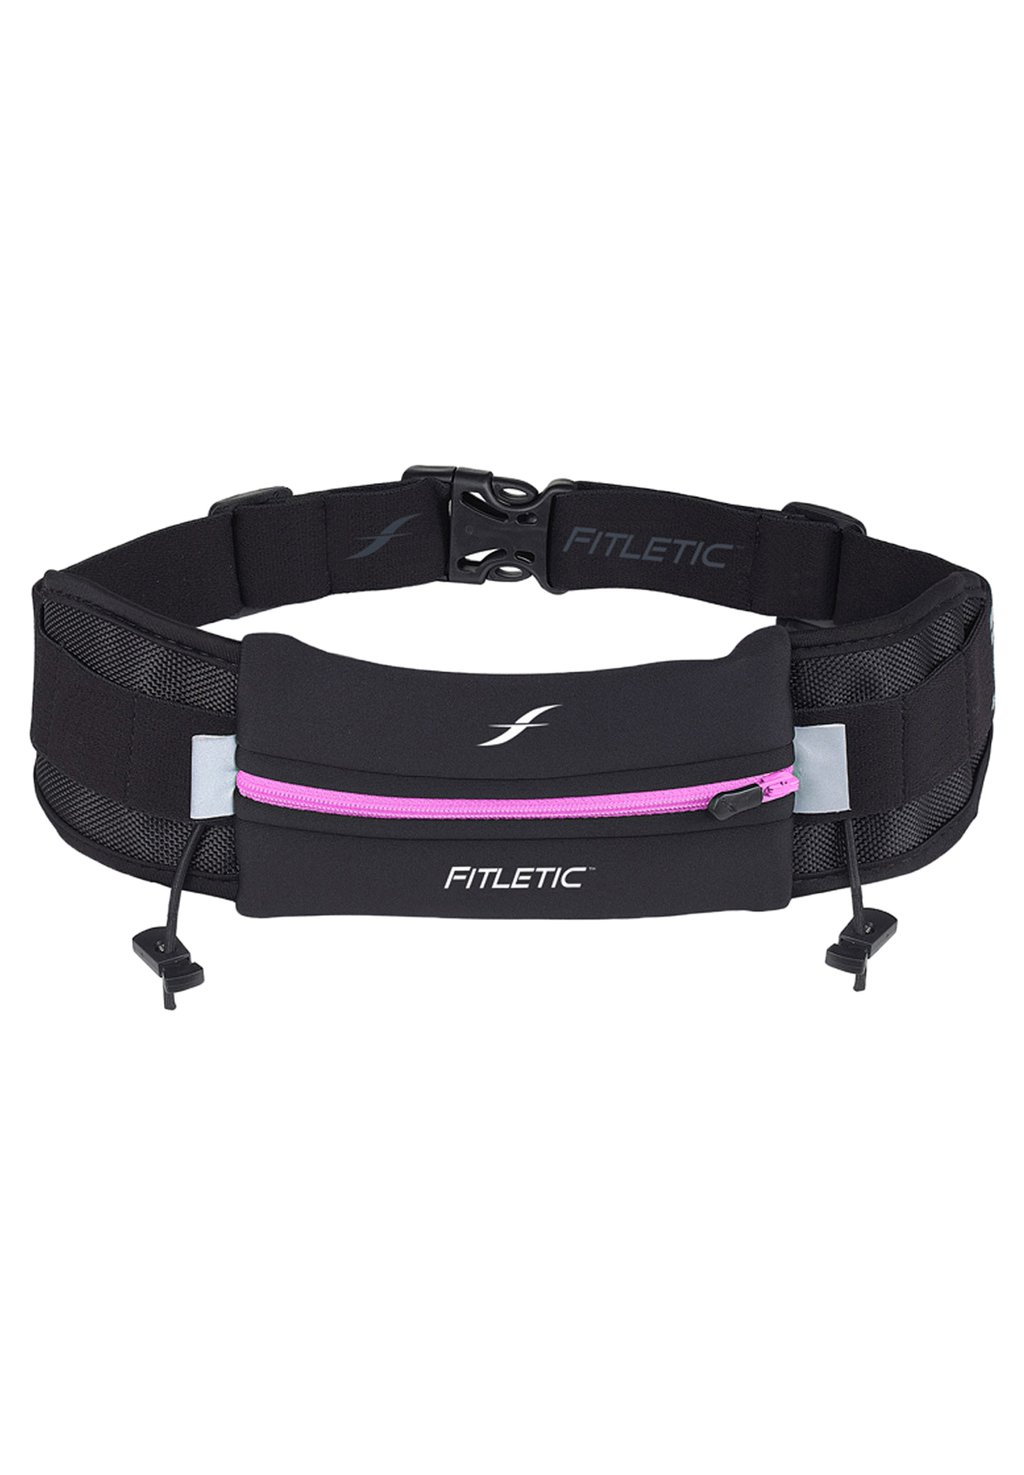 Поясная сумка Fitletic, цвет schwarz pink фото